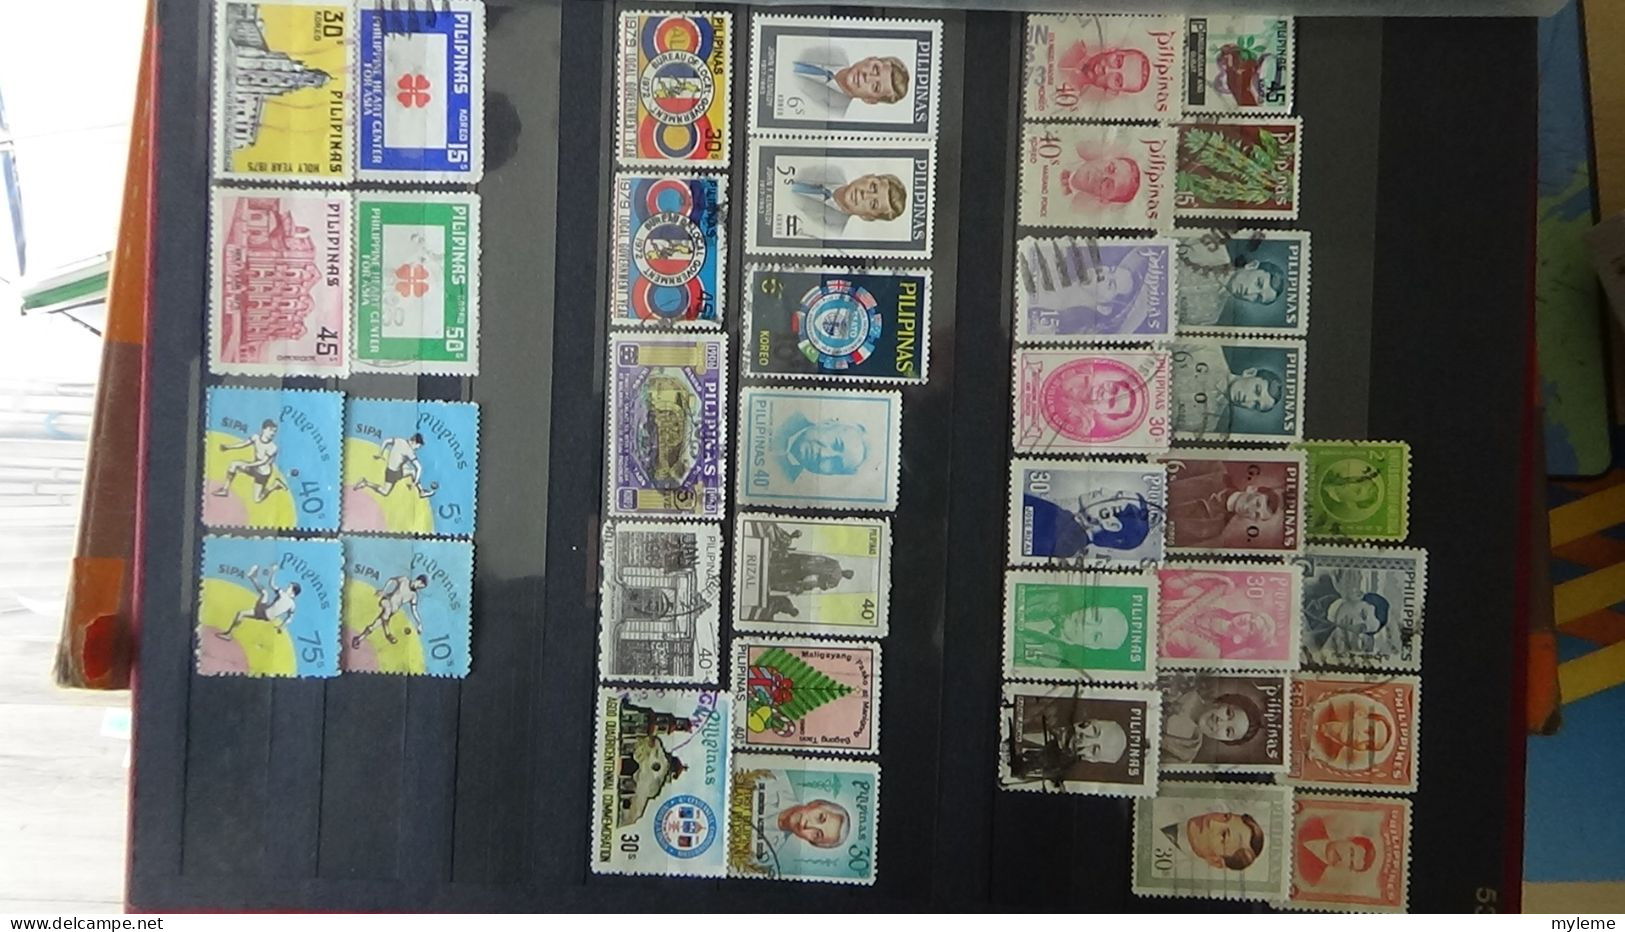 BG2 Ensemble de timbres de divers pays + France PA N° 15 ** Cote 1500 euros. A saisir !!!